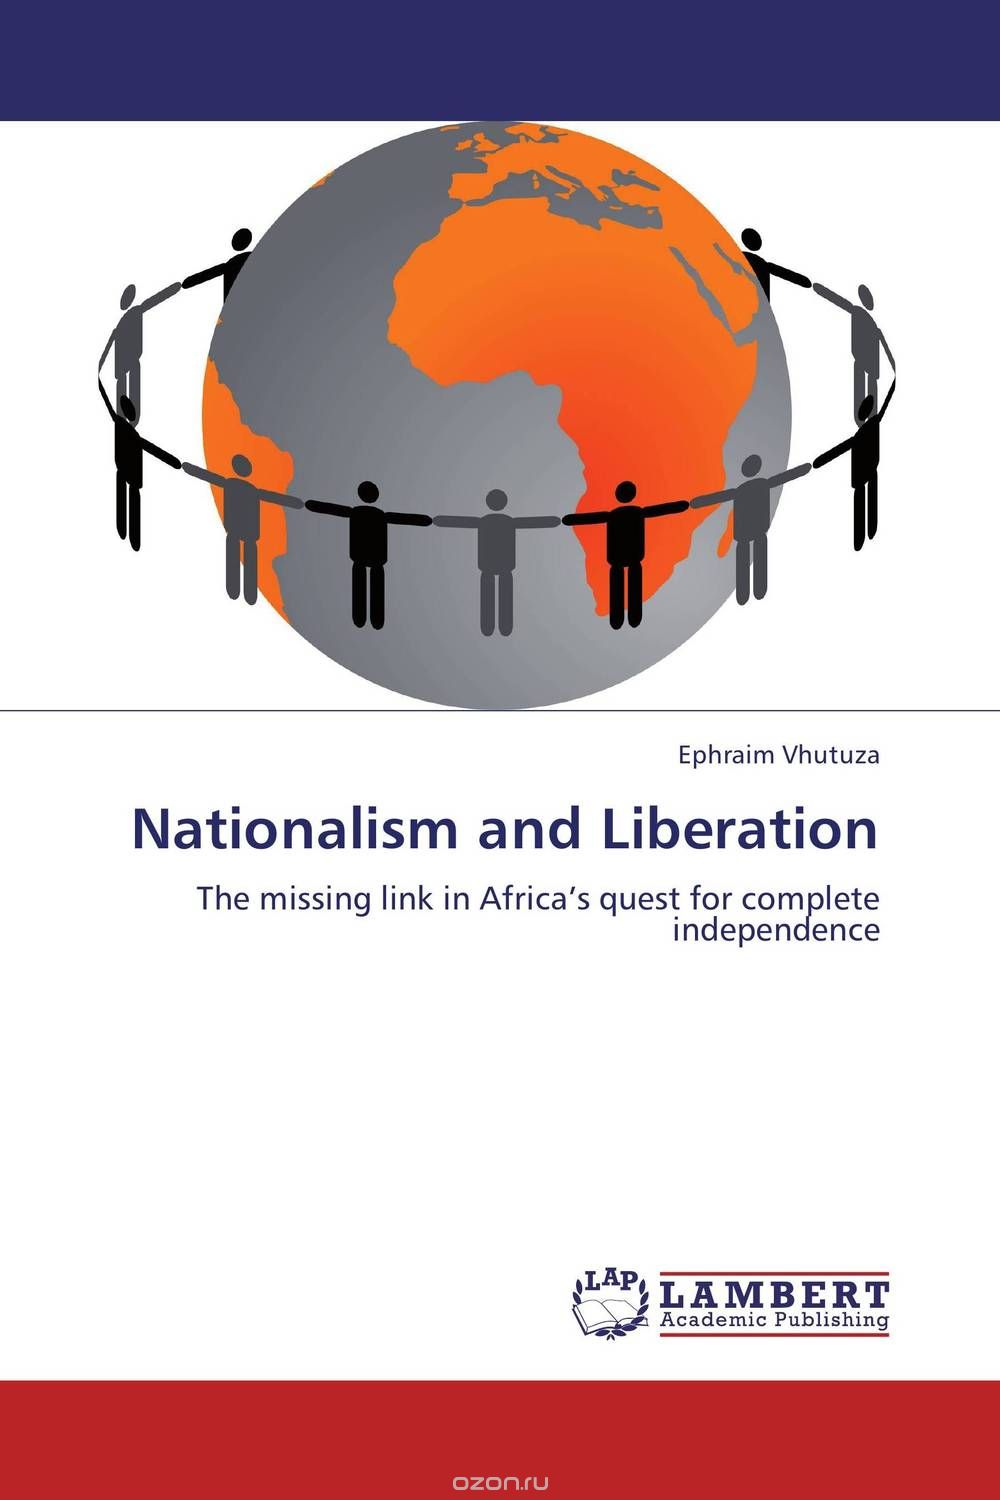 Скачать книгу "Nationalism and Liberation"